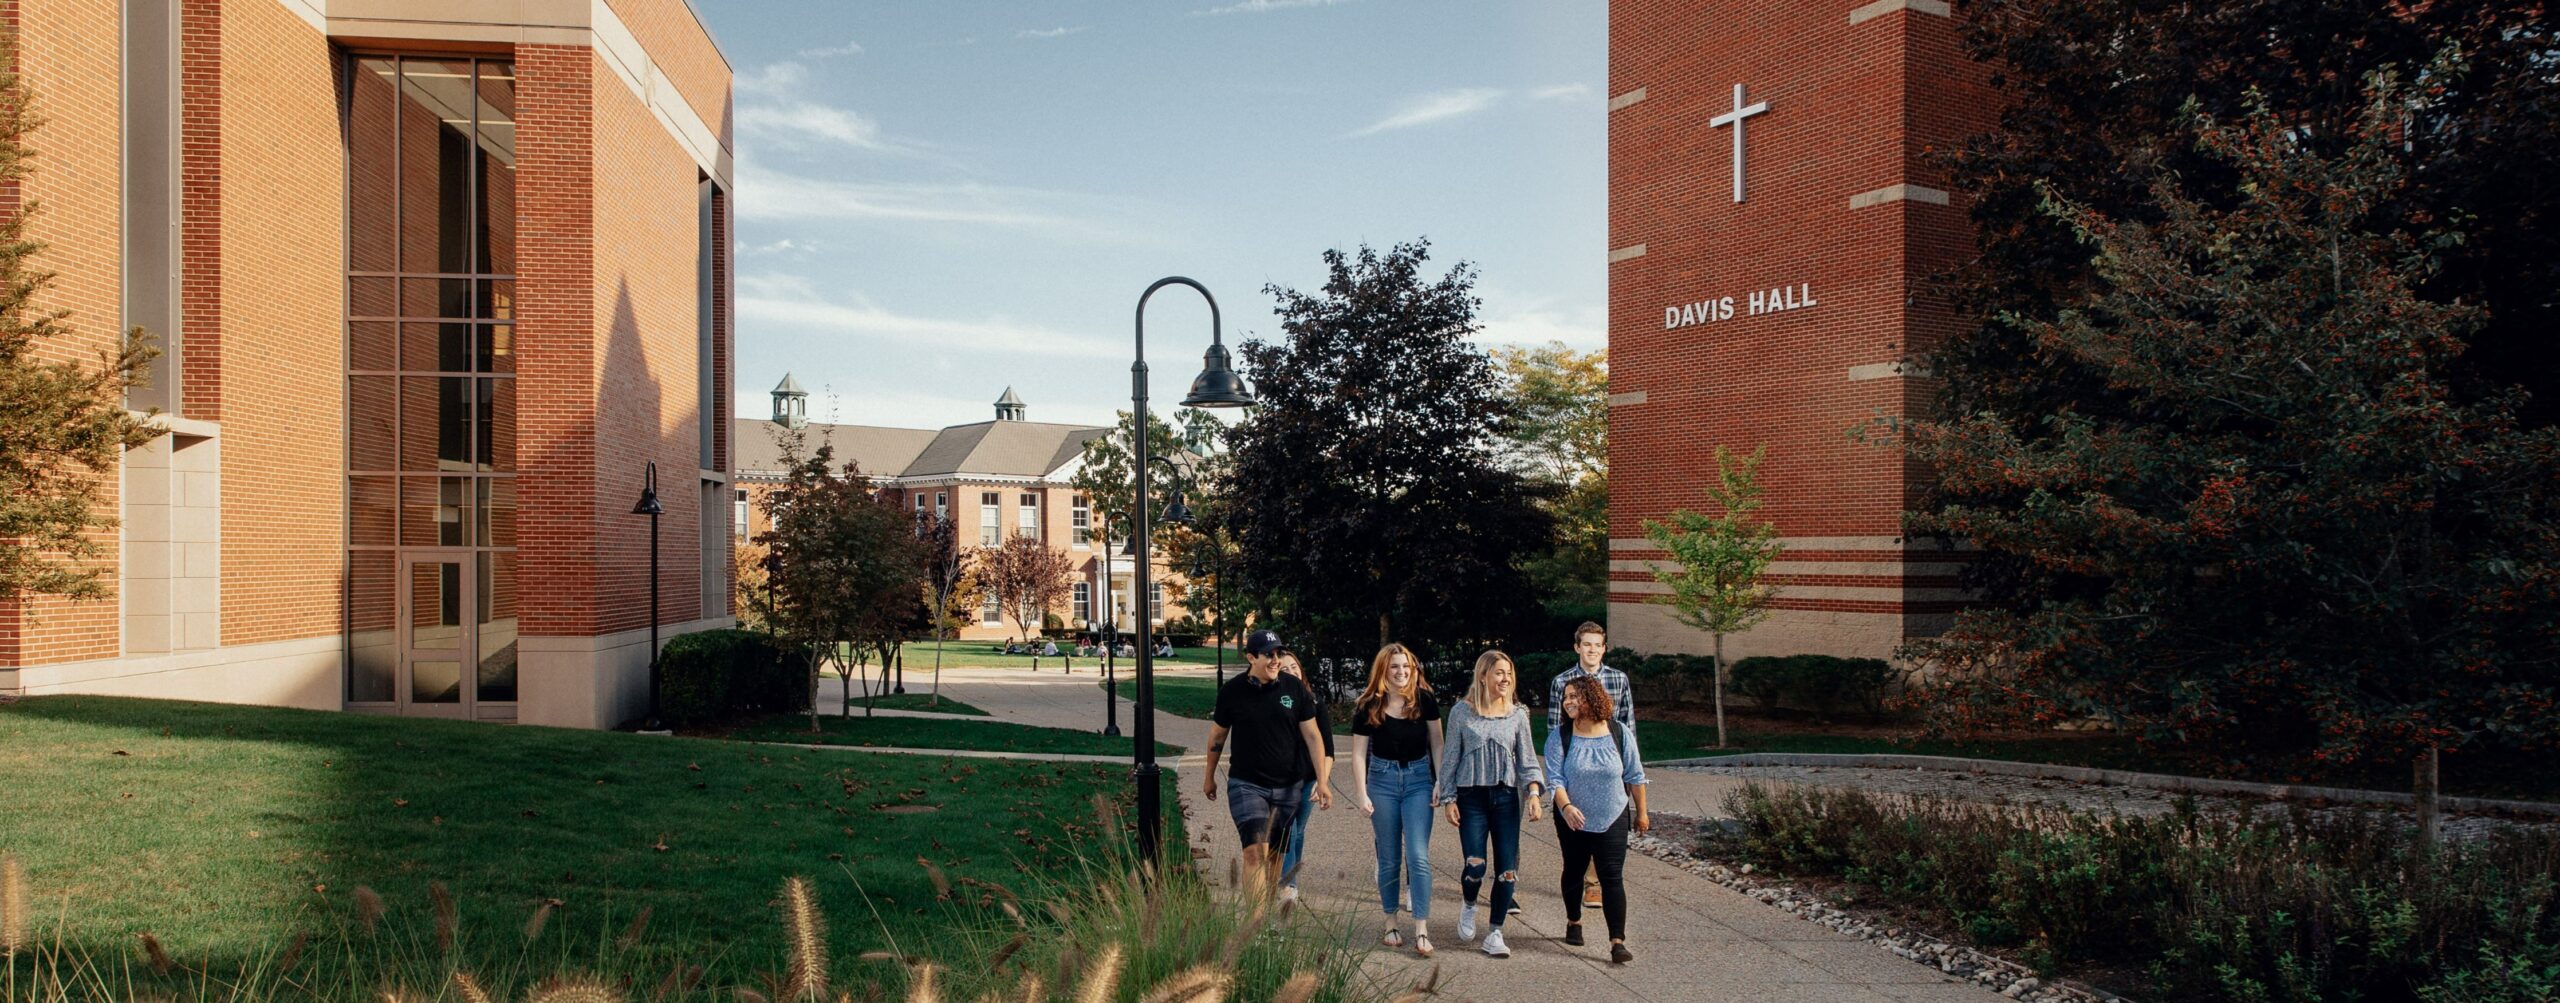 Students walking by Davis Hall.